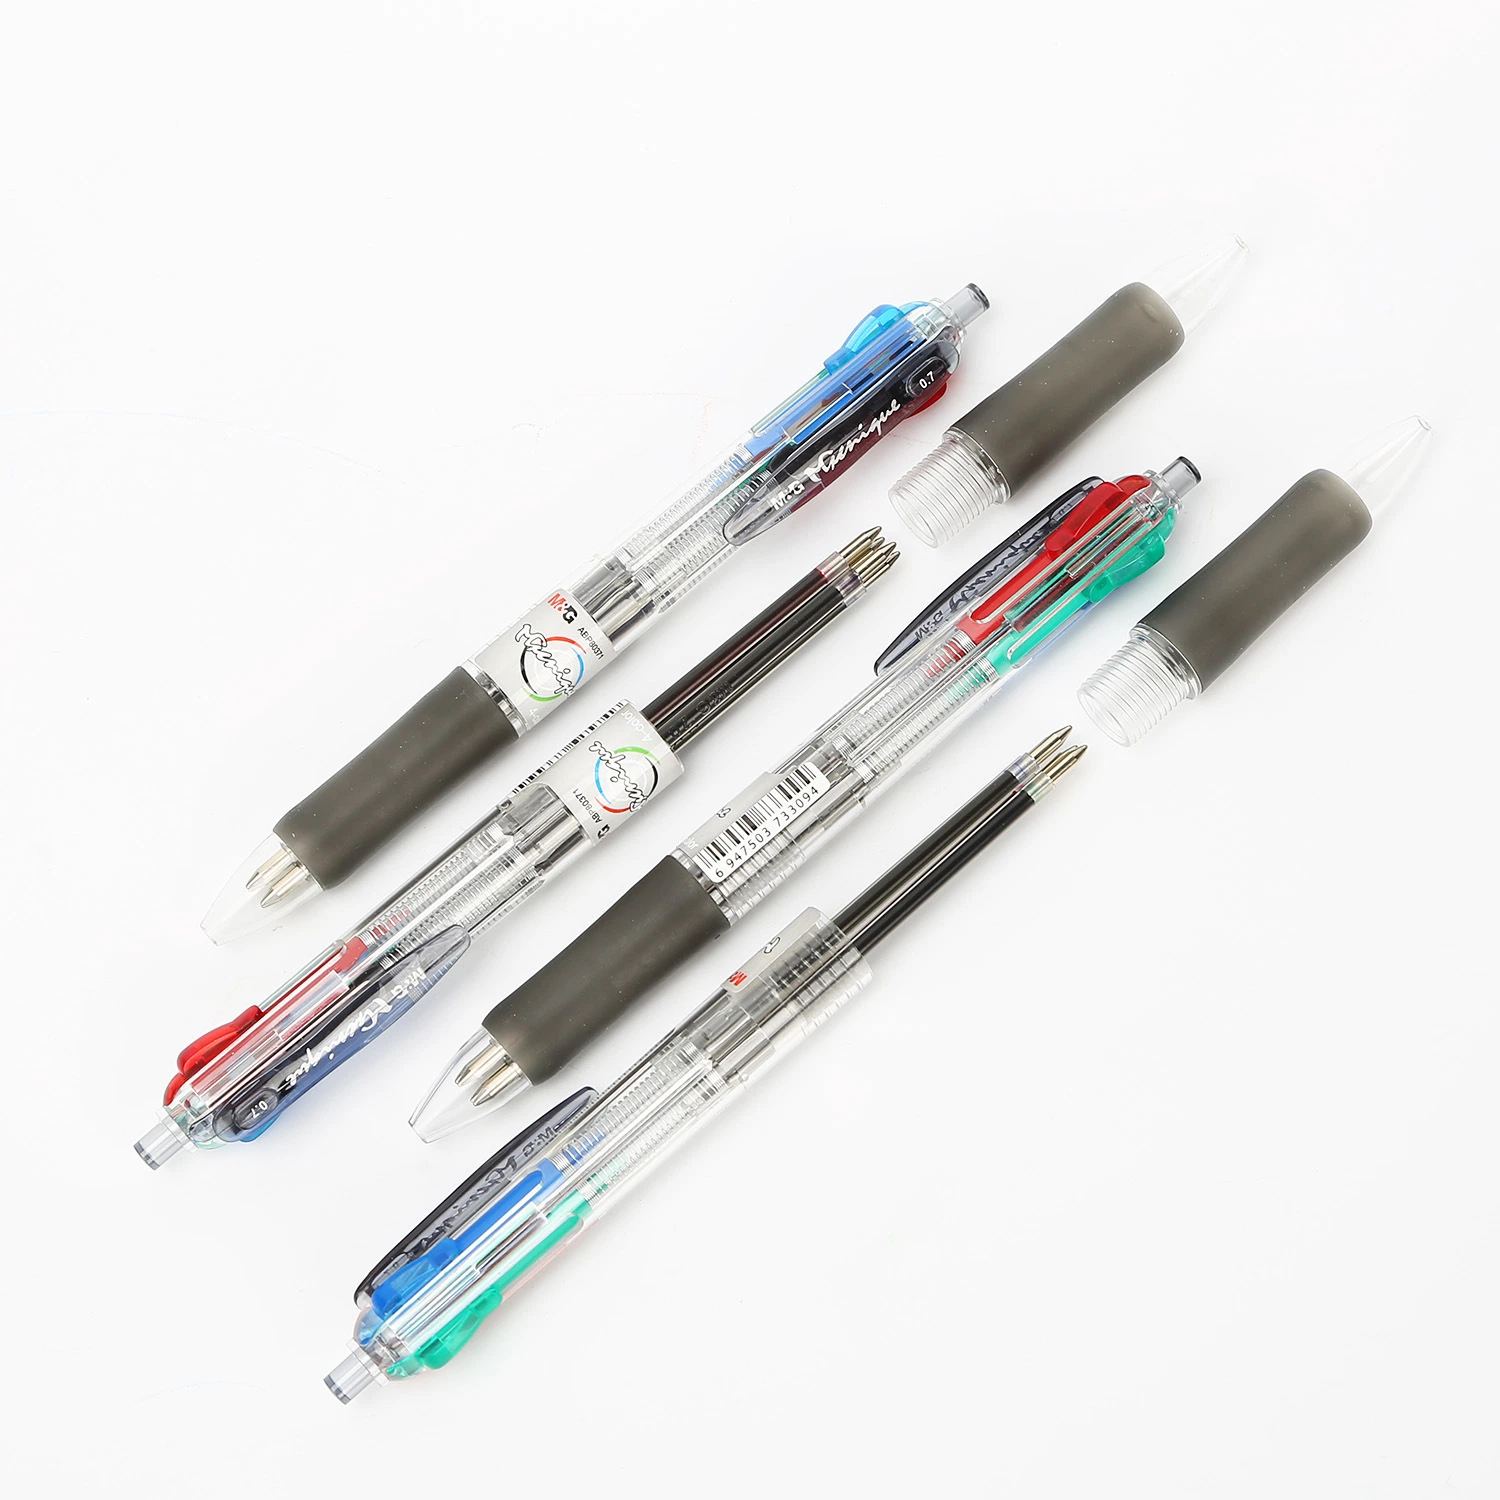 Suministros de oficina modernos 4 en 1 Multicolor Bolígrafo plástico bolígrafo de regalo